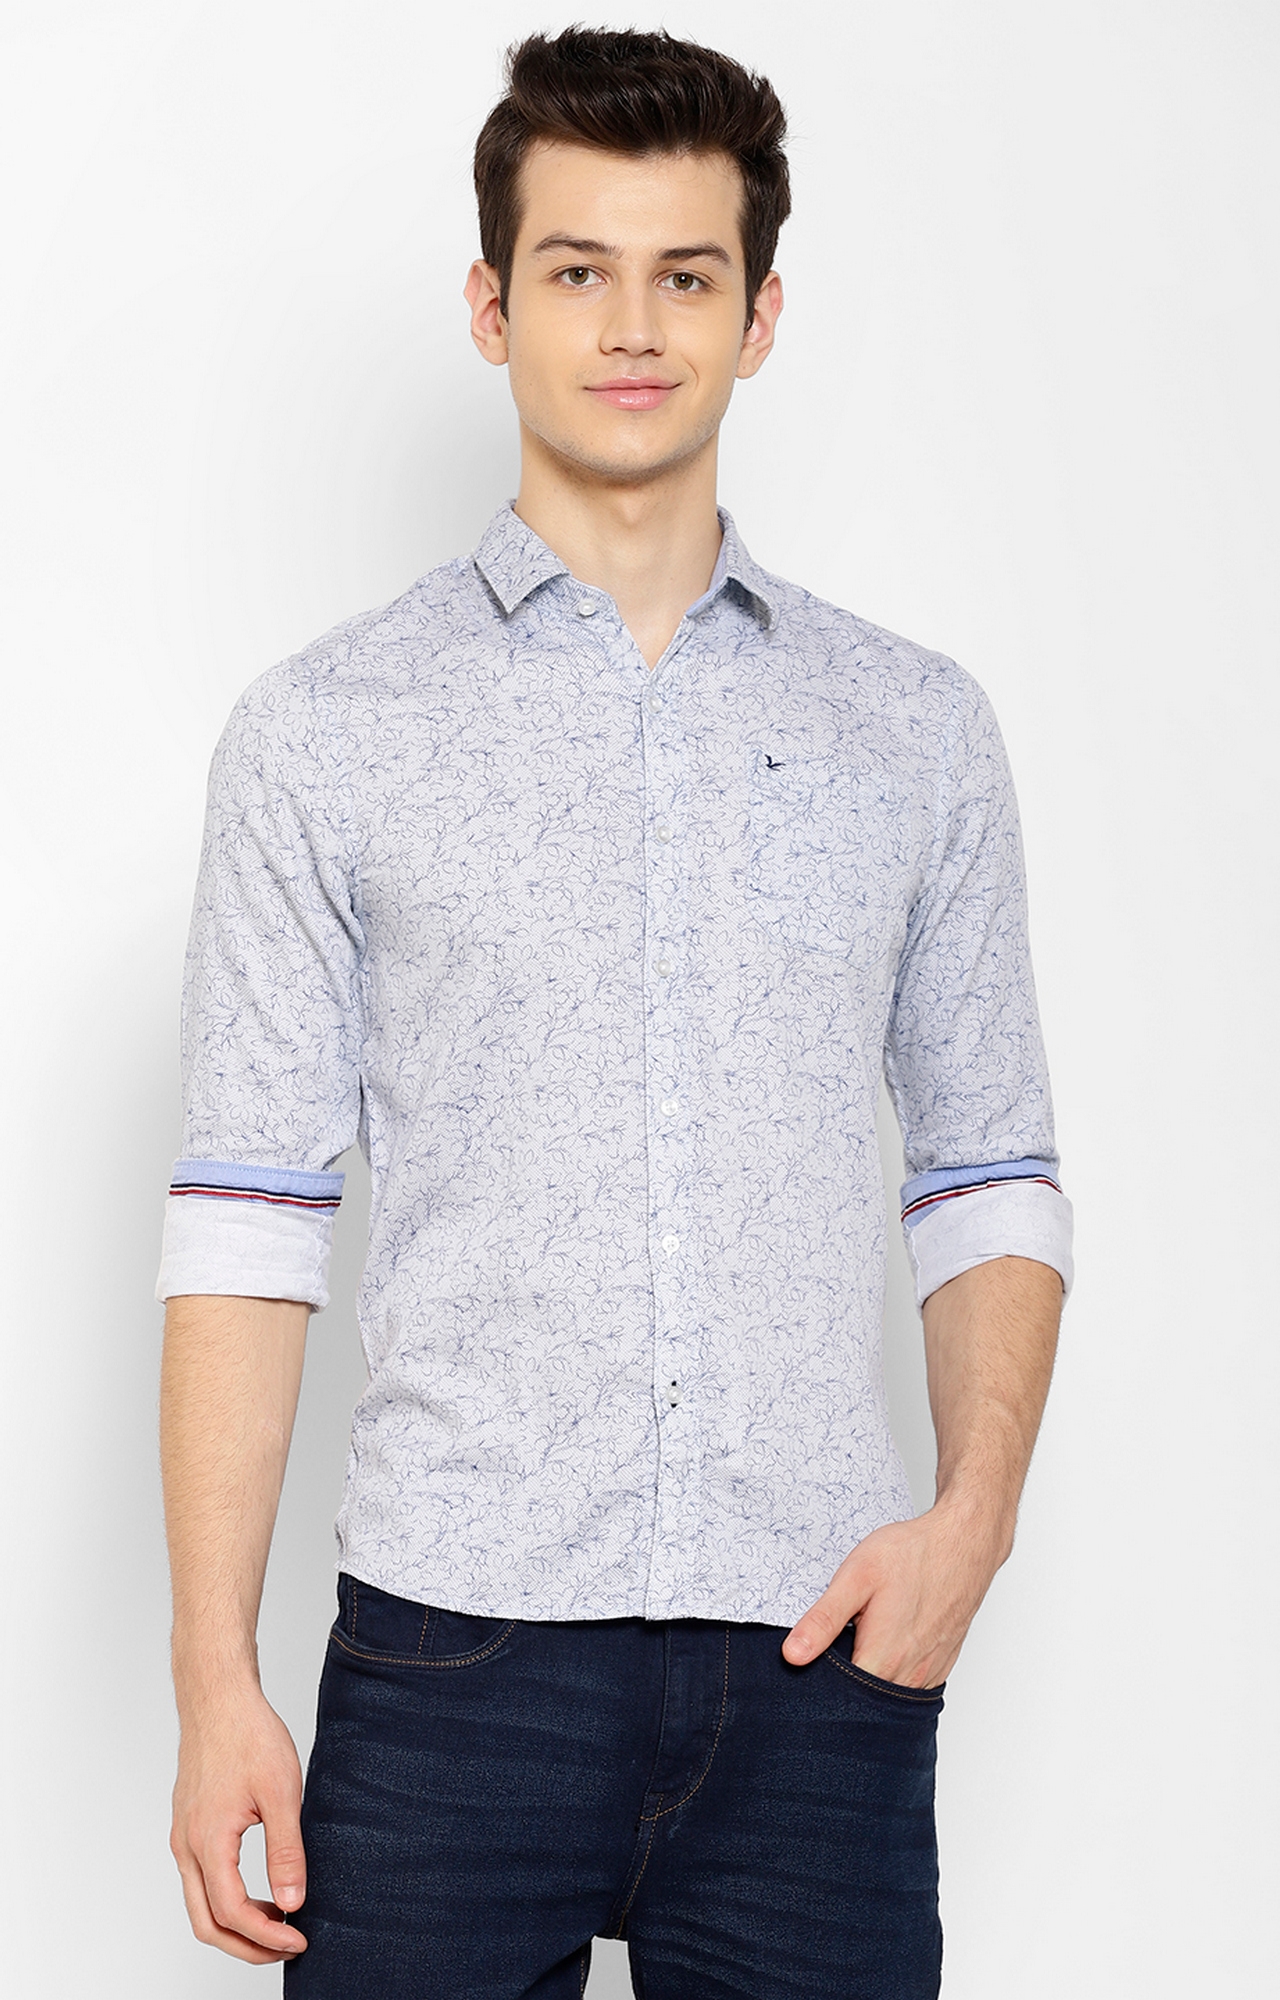 Cape Canary Men's Cotton Blue Printed Spread Collar Shirt